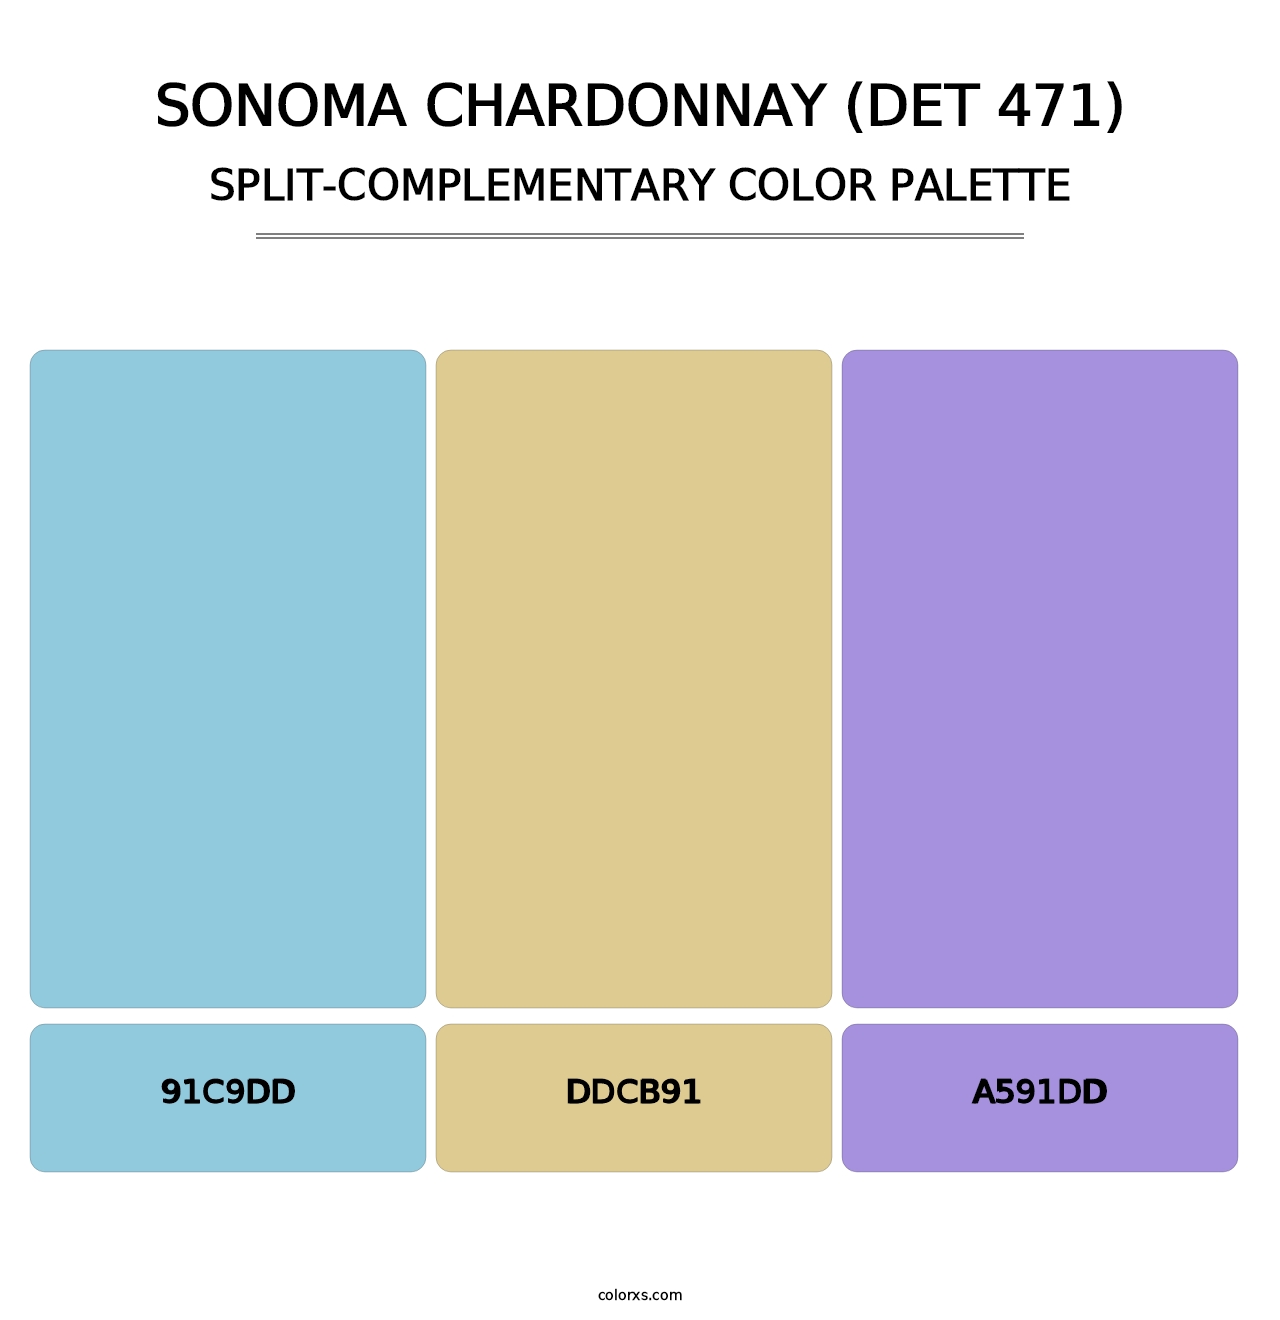 Sonoma Chardonnay (DET 471) - Split-Complementary Color Palette